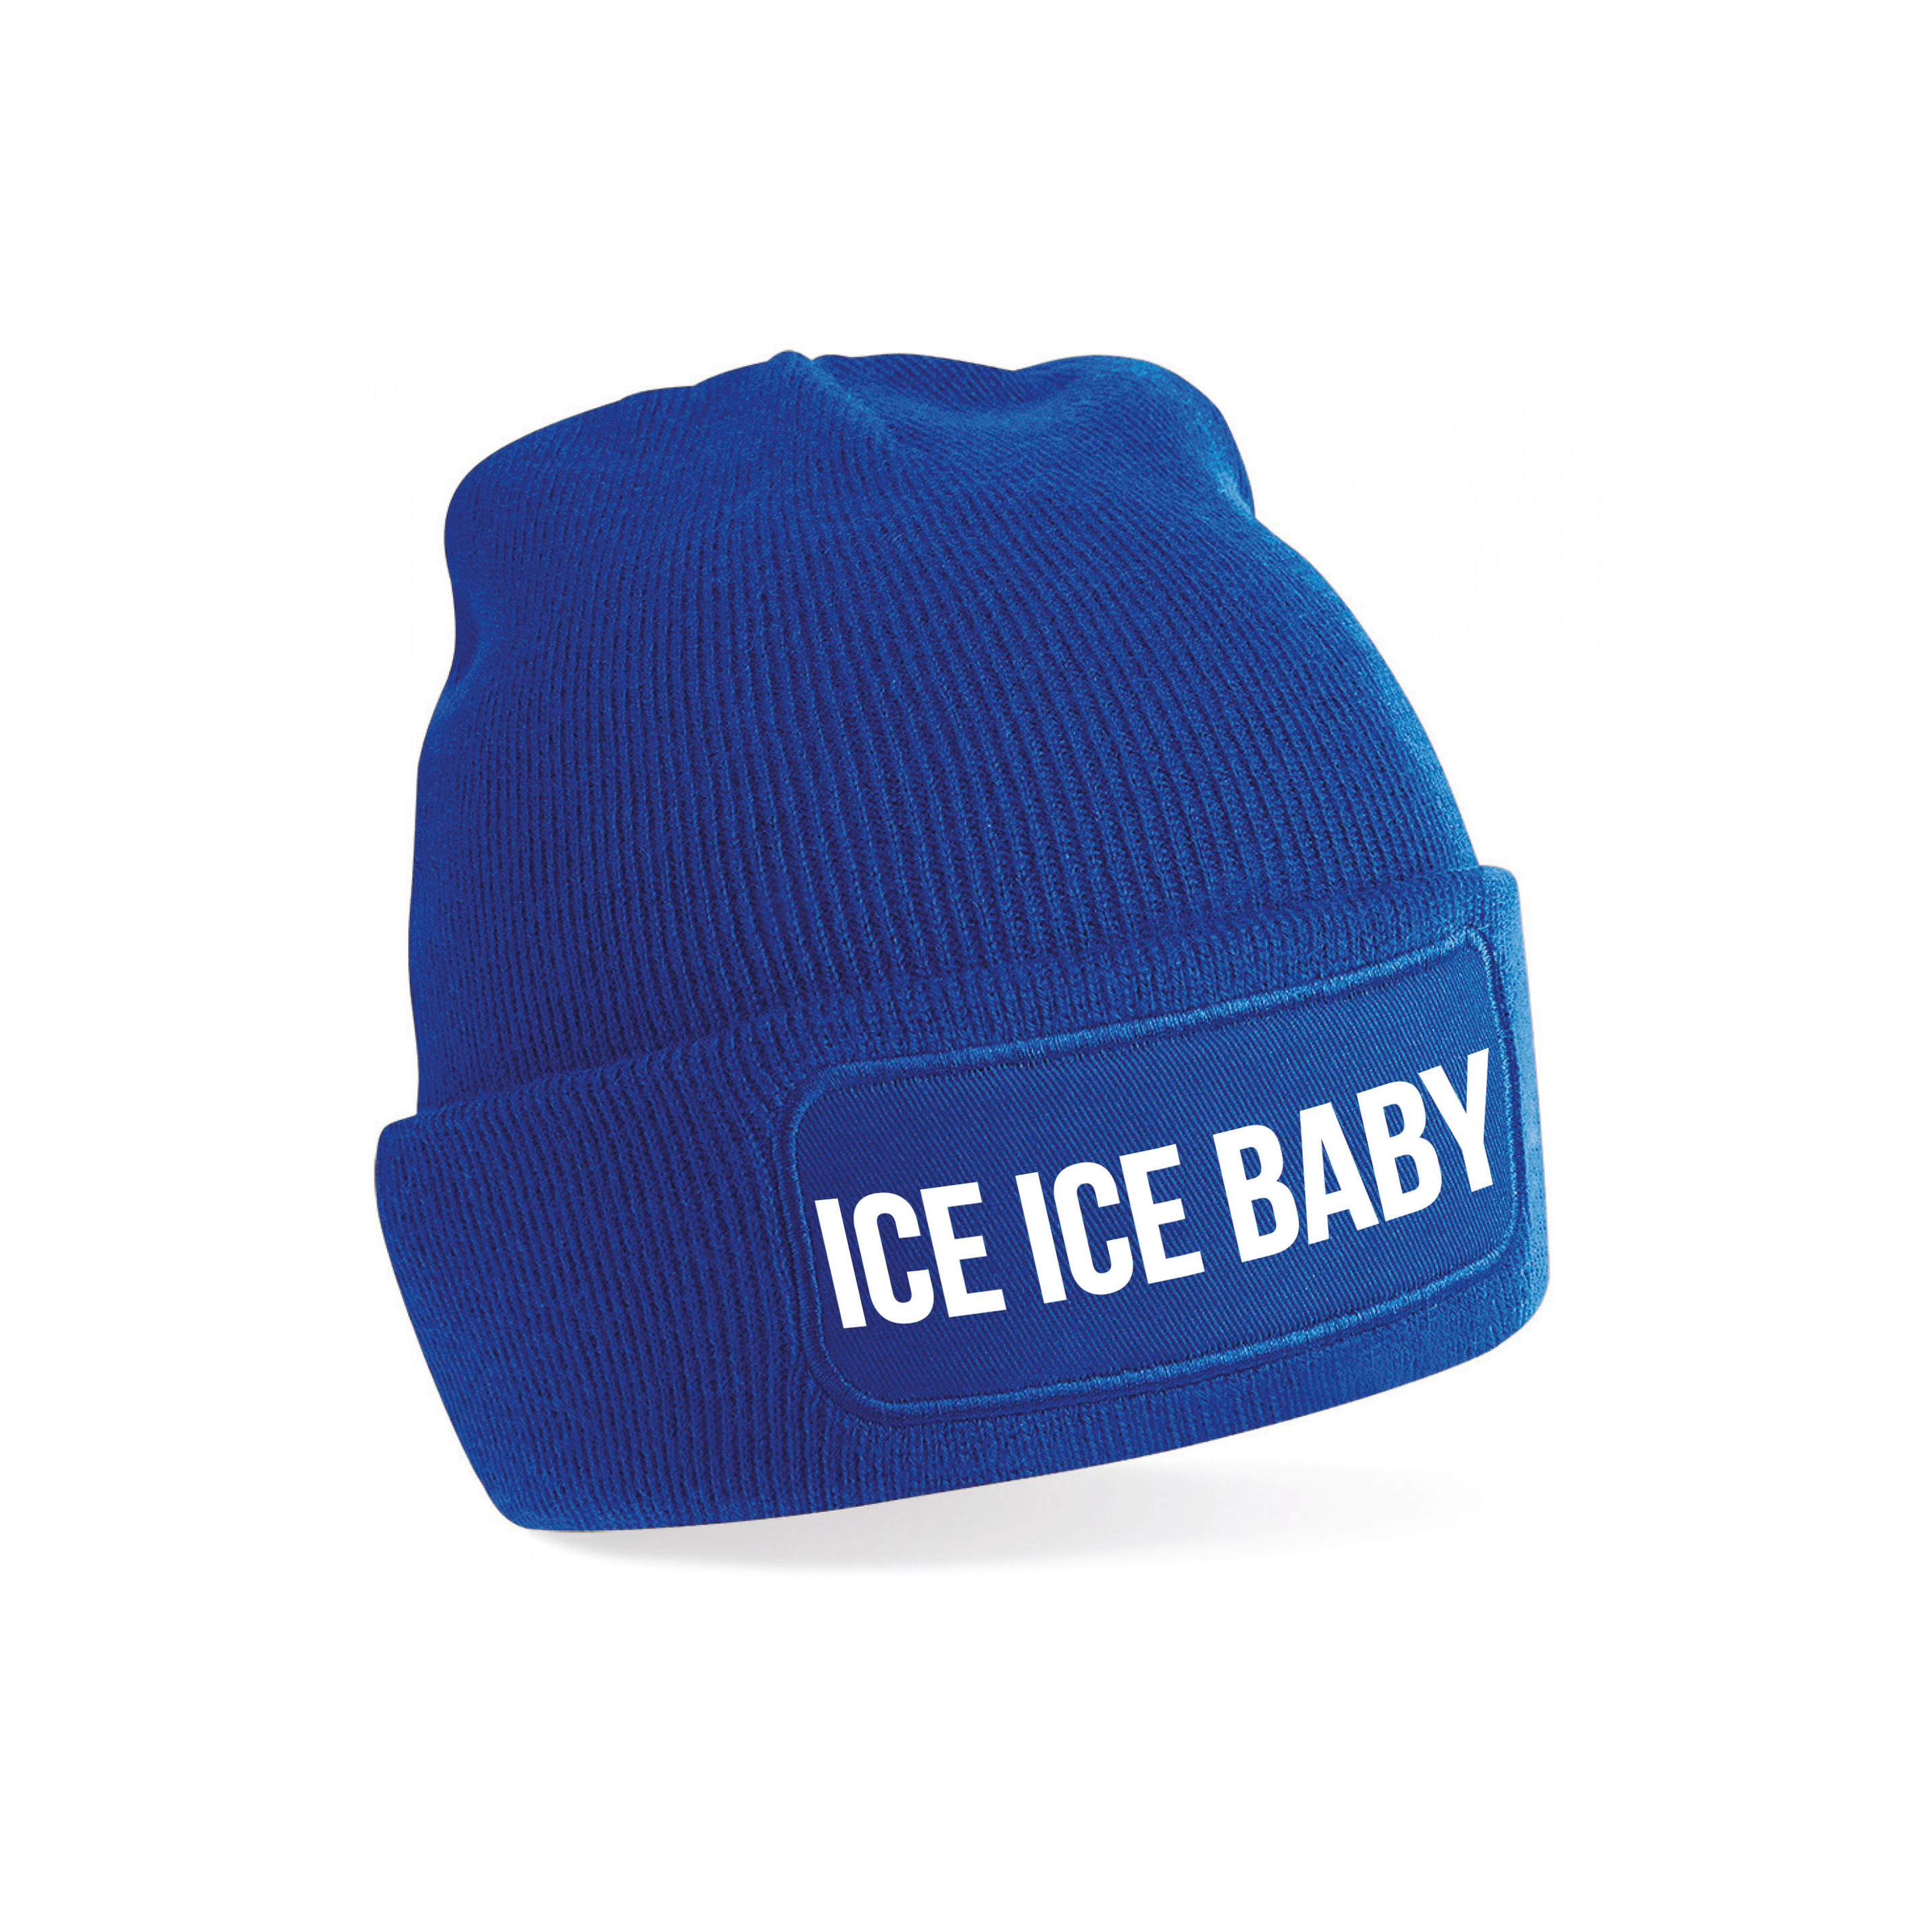 Ice ice baby muts unisex one size blauw